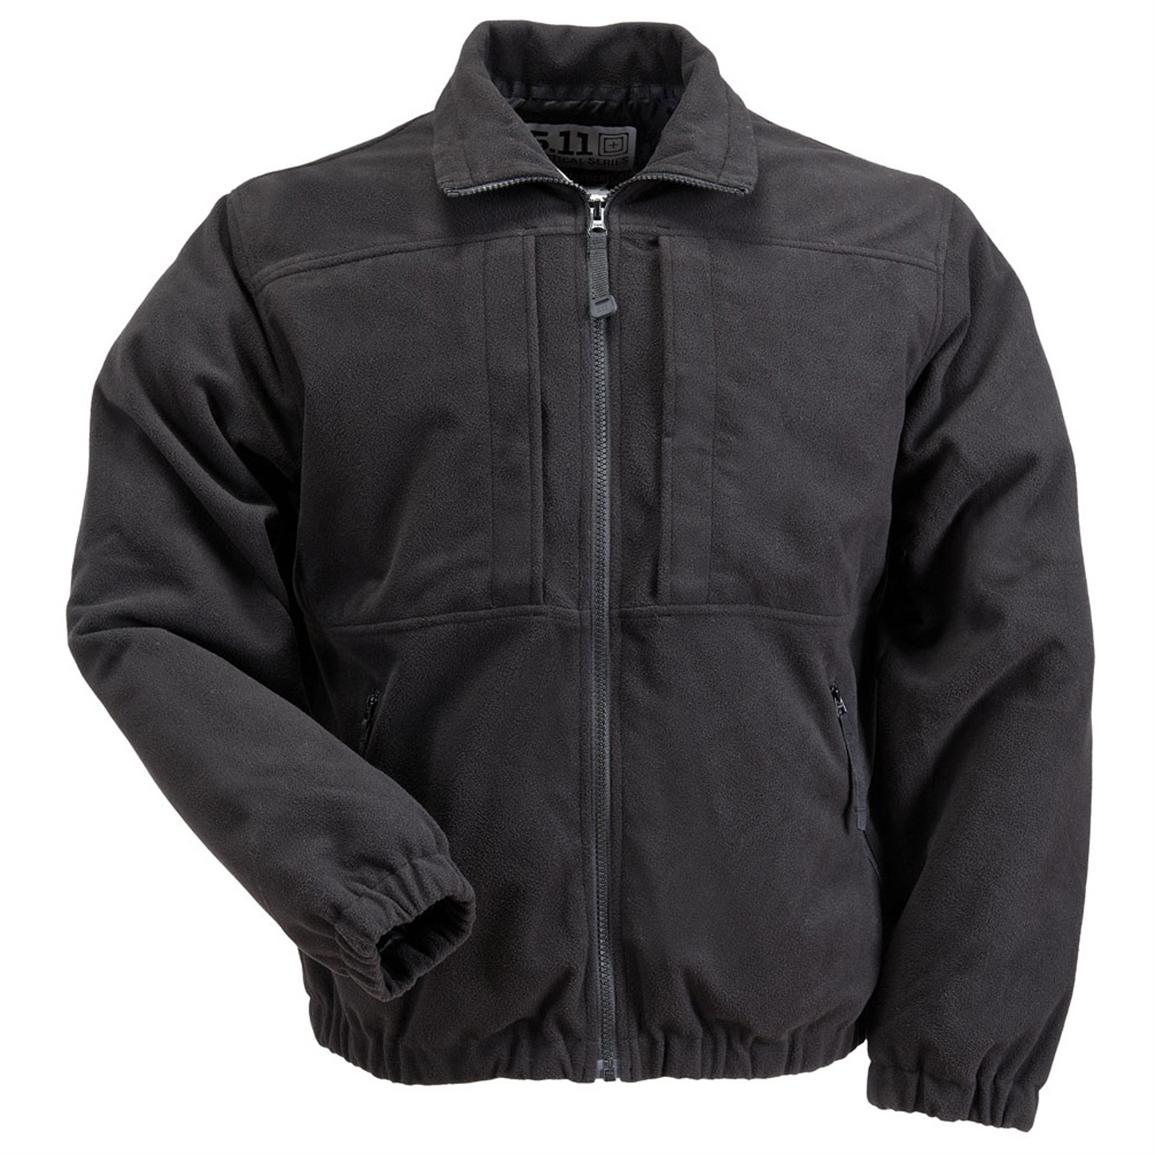 5.11 Tactical Covert Fleece Jacket - 230267, Tactical Clothing at ...